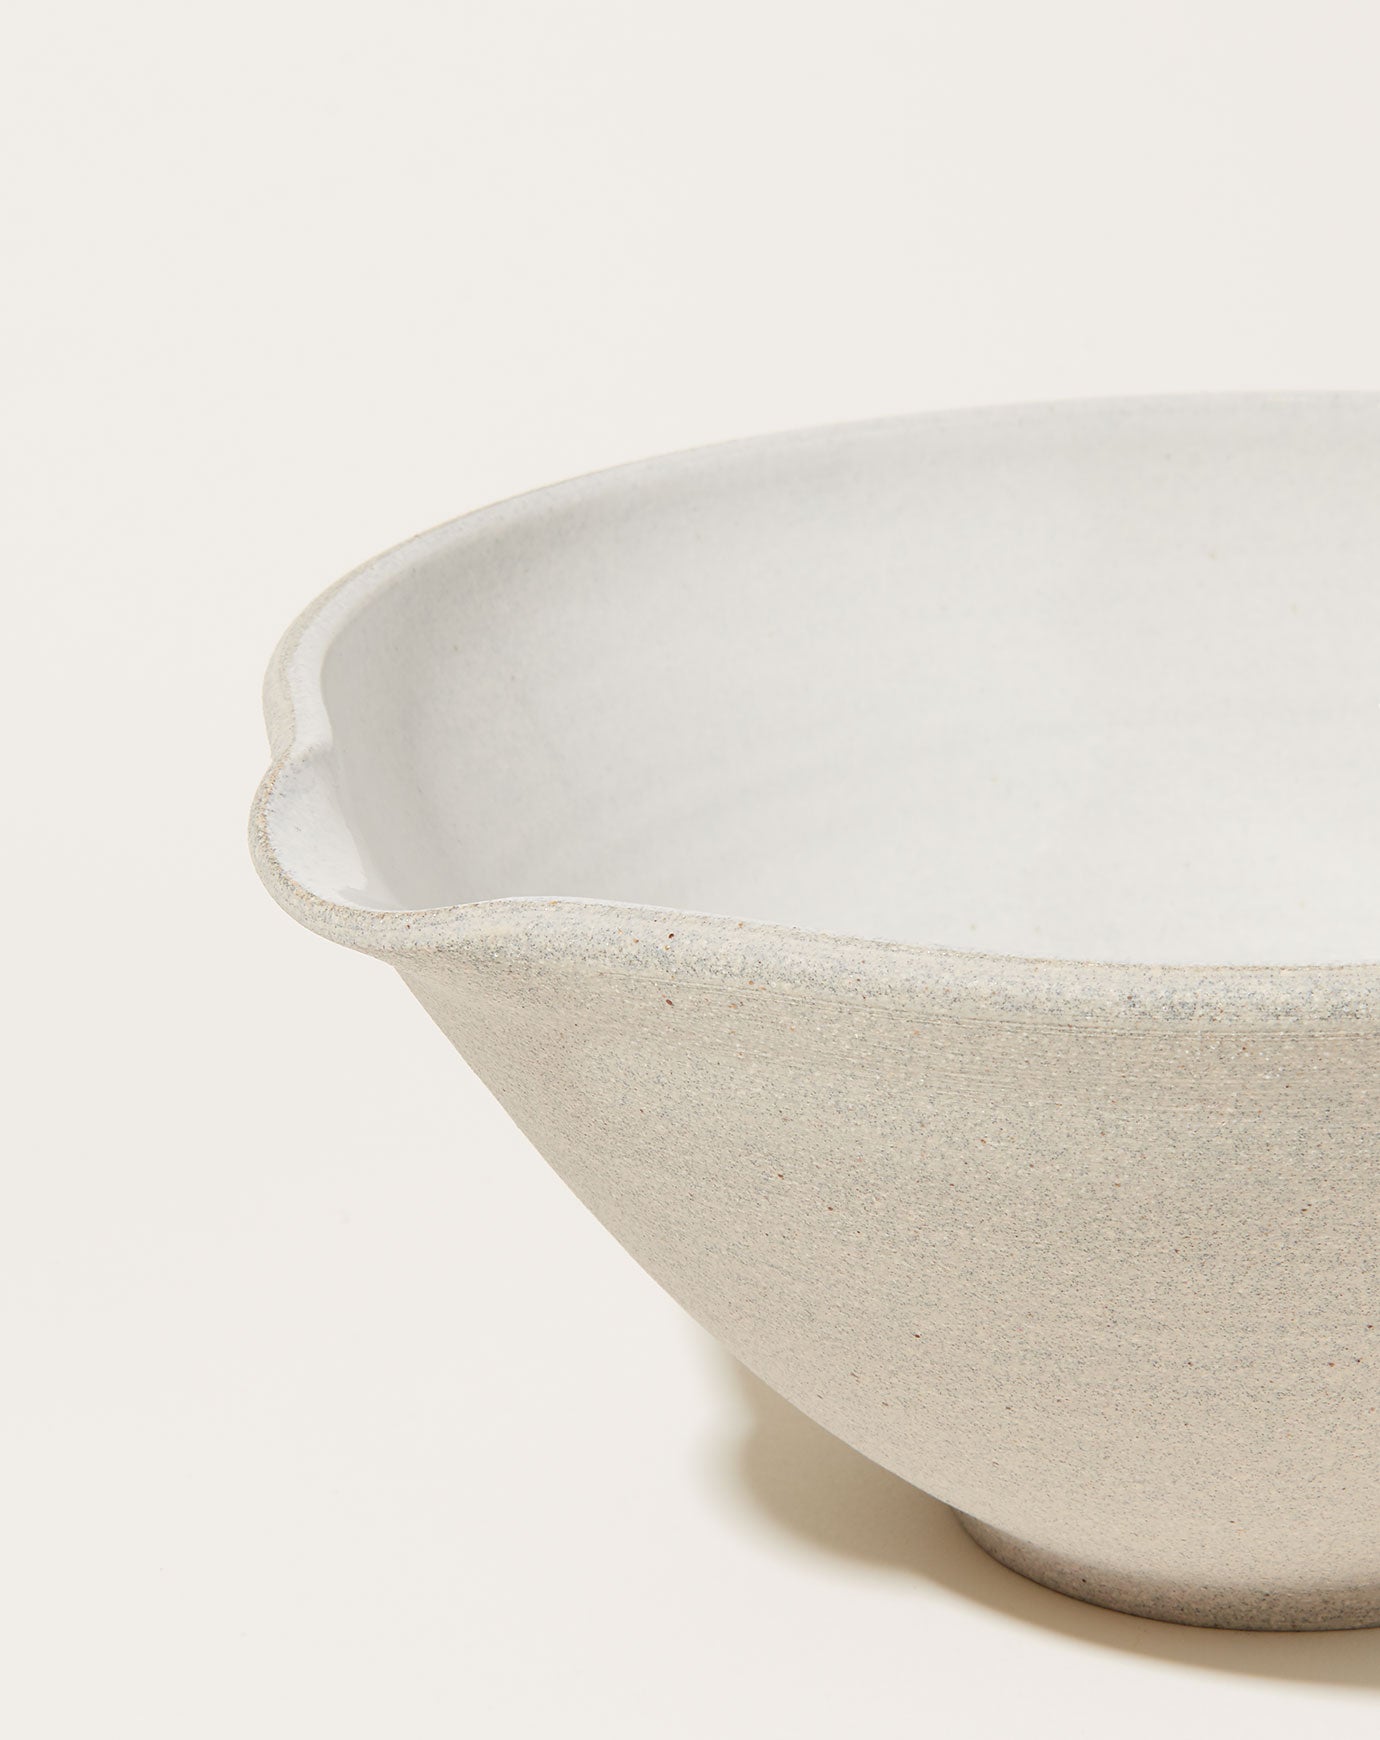 Sheldon Ceramics Vermont Pour Mixing Bowl